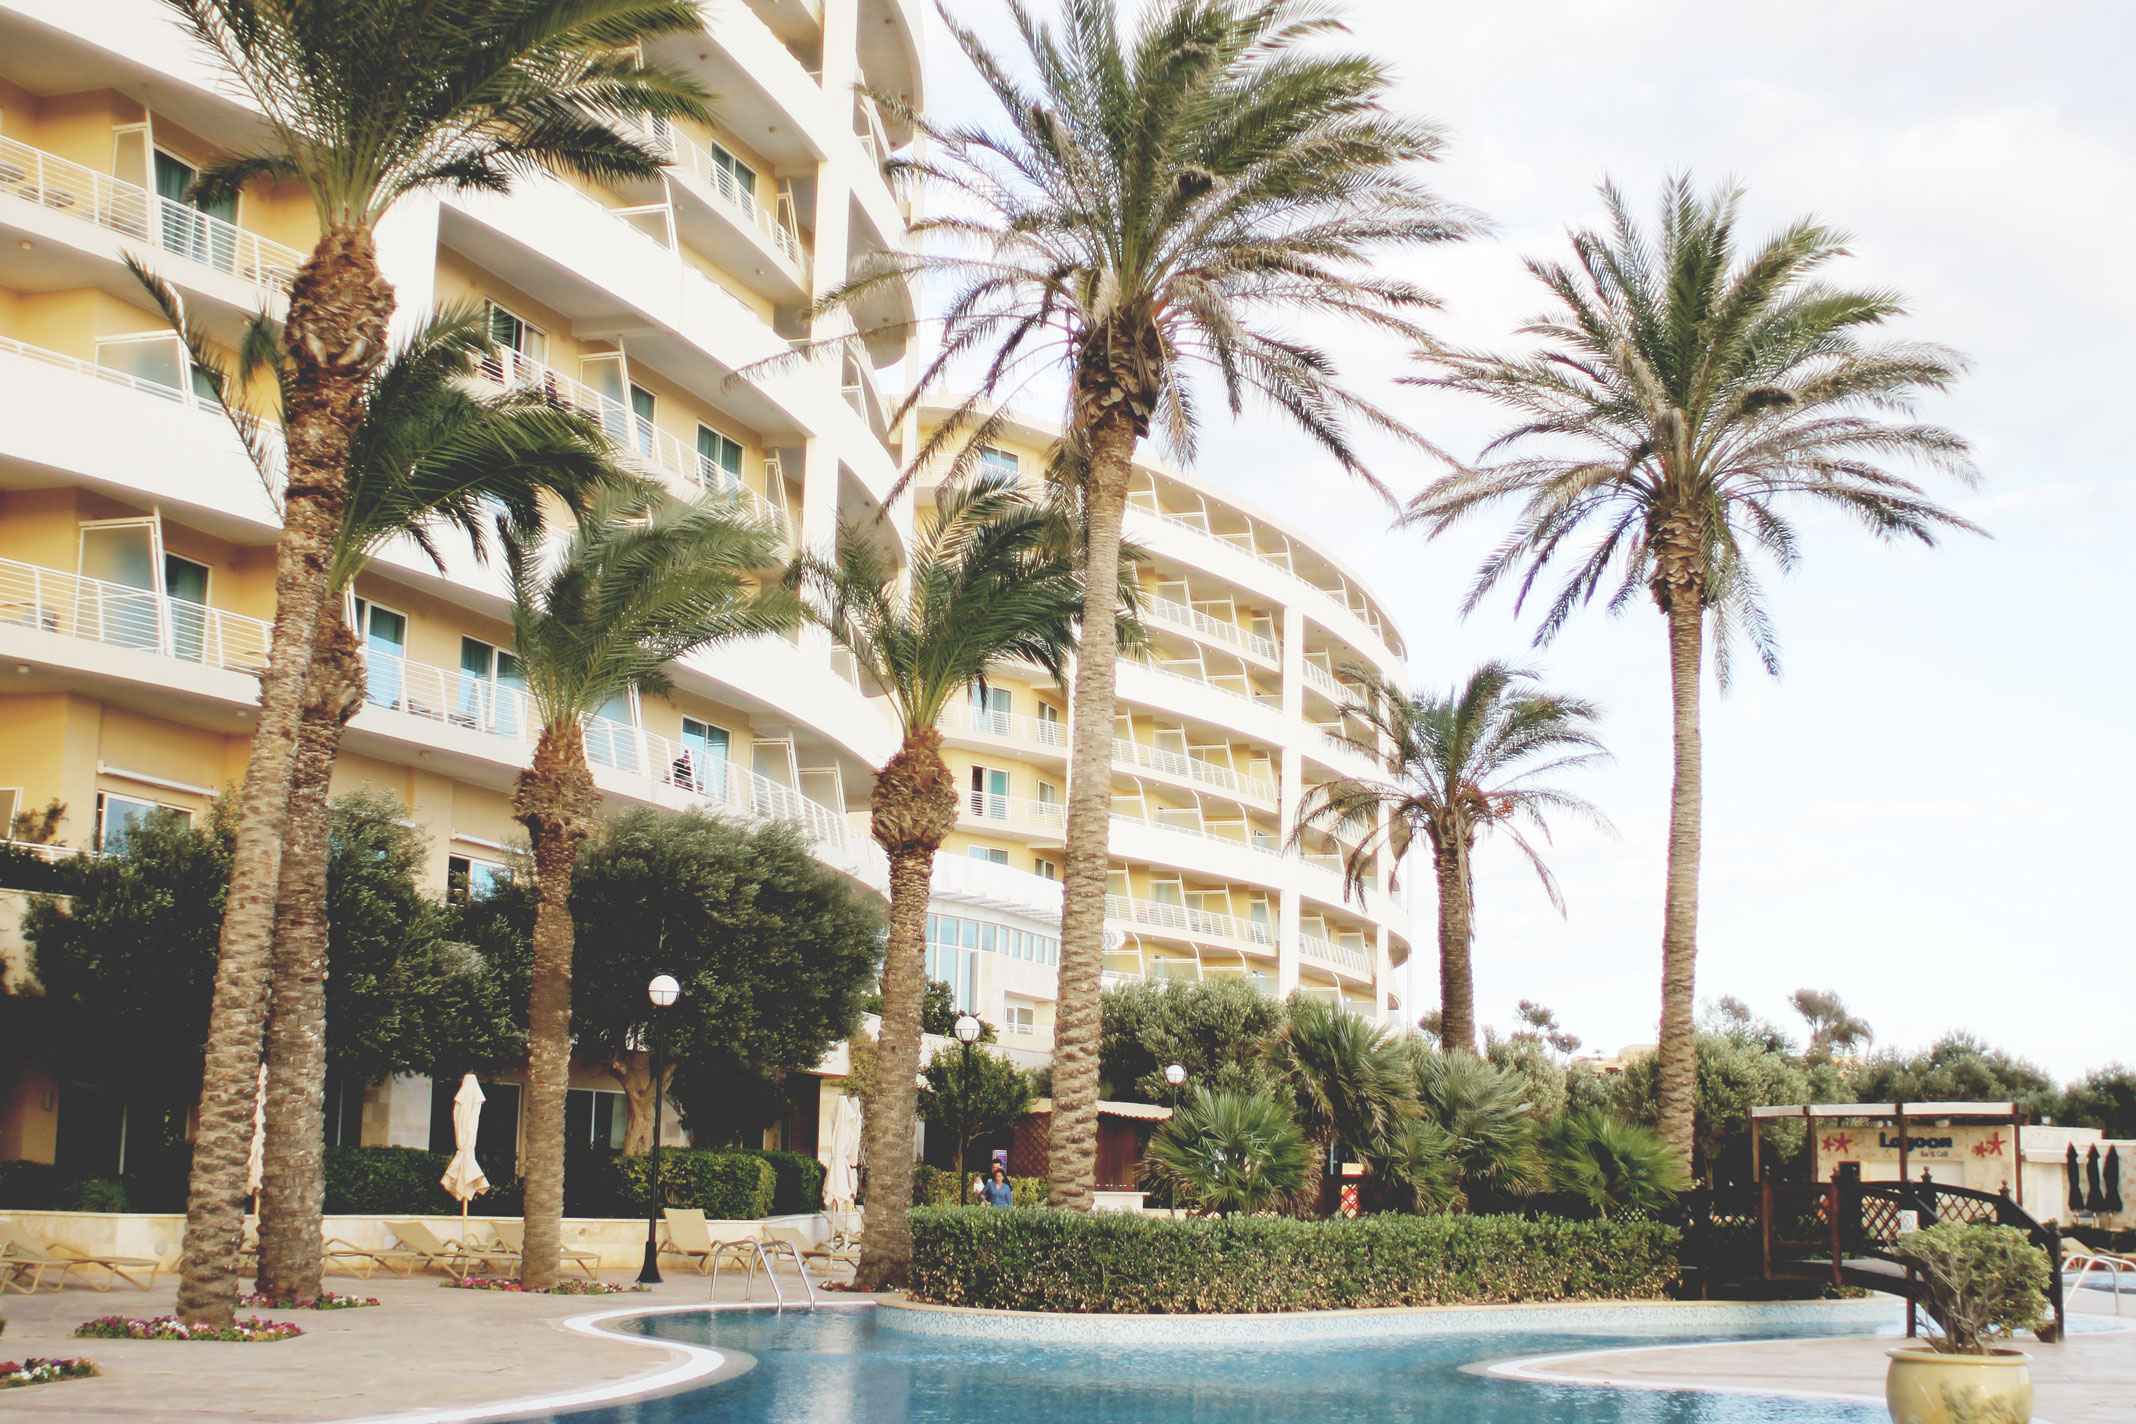 Styleat30 Travel Blog - Radisson Blu Resort & Spa, Malta, Golden Sands Hotel Review - 21